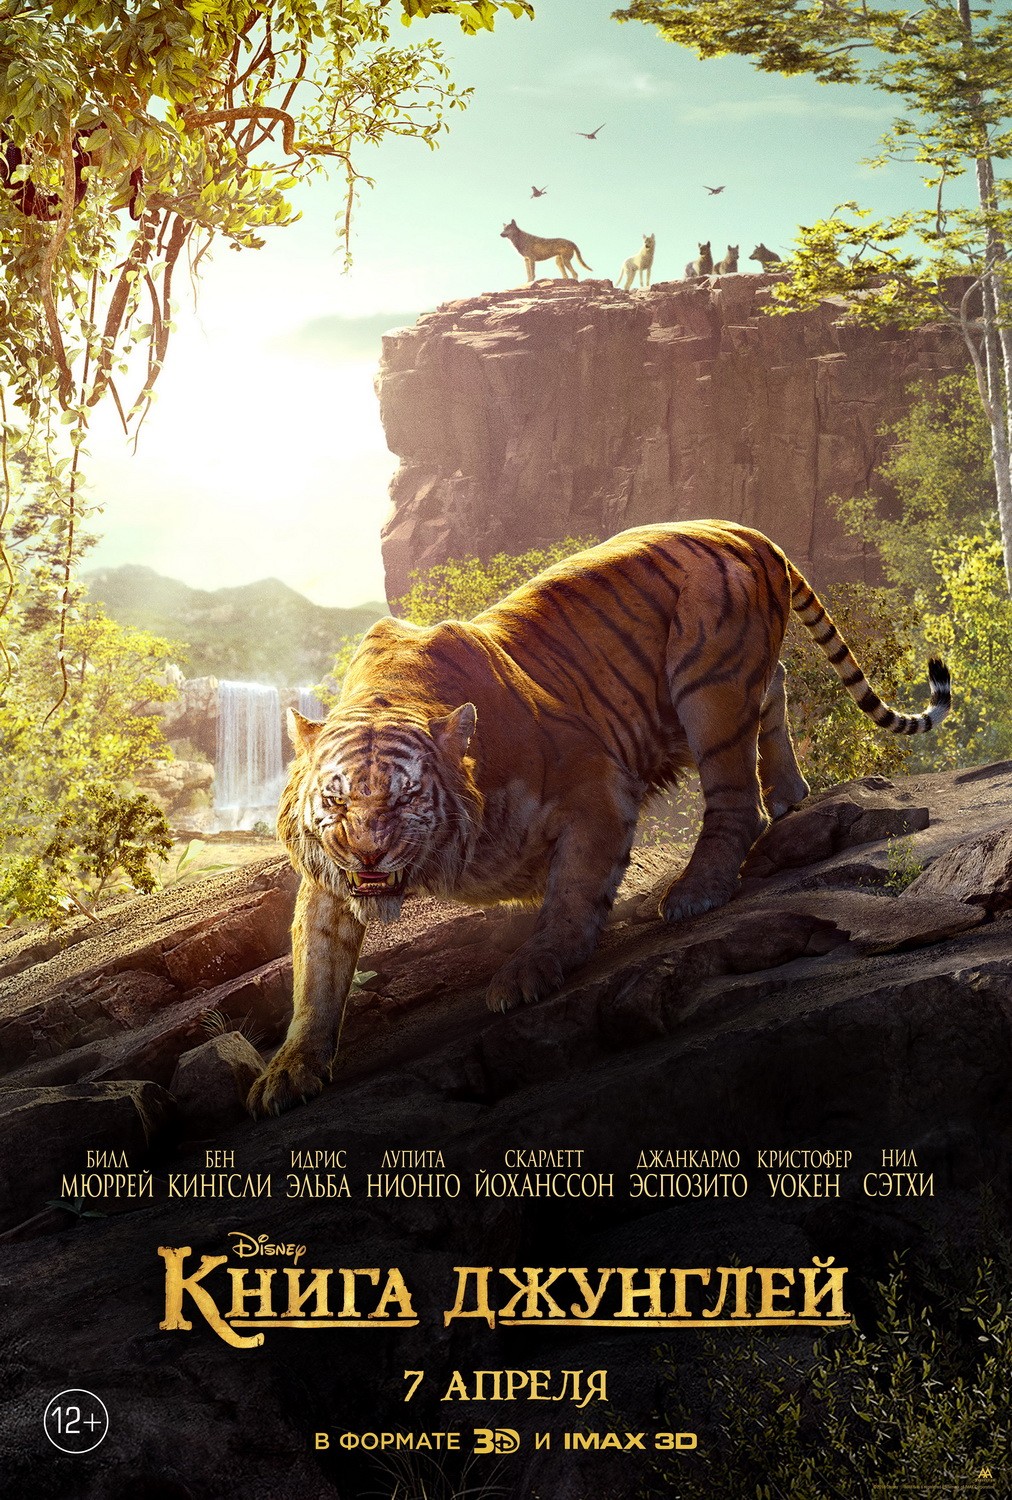 Книга джунглей: постер N119368